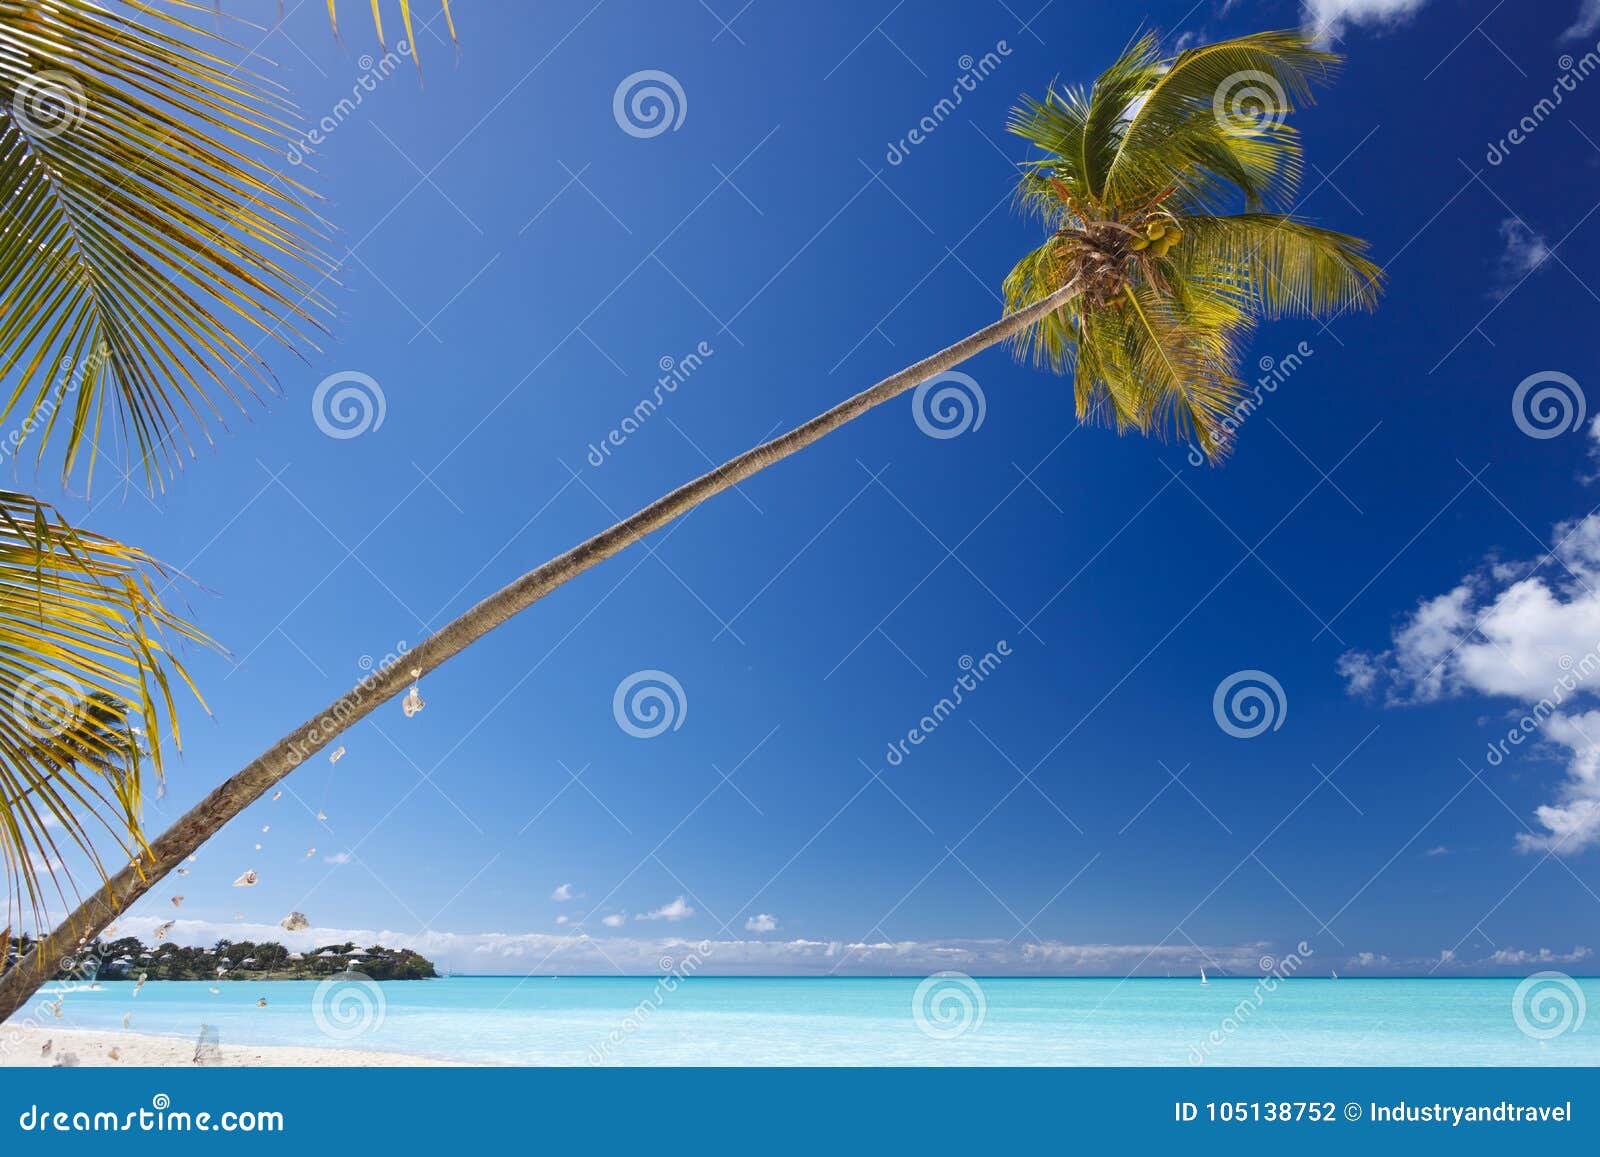 West Indies Antigua Postcard Coconut Palm Trees on a Pretty Beach Caribbean 